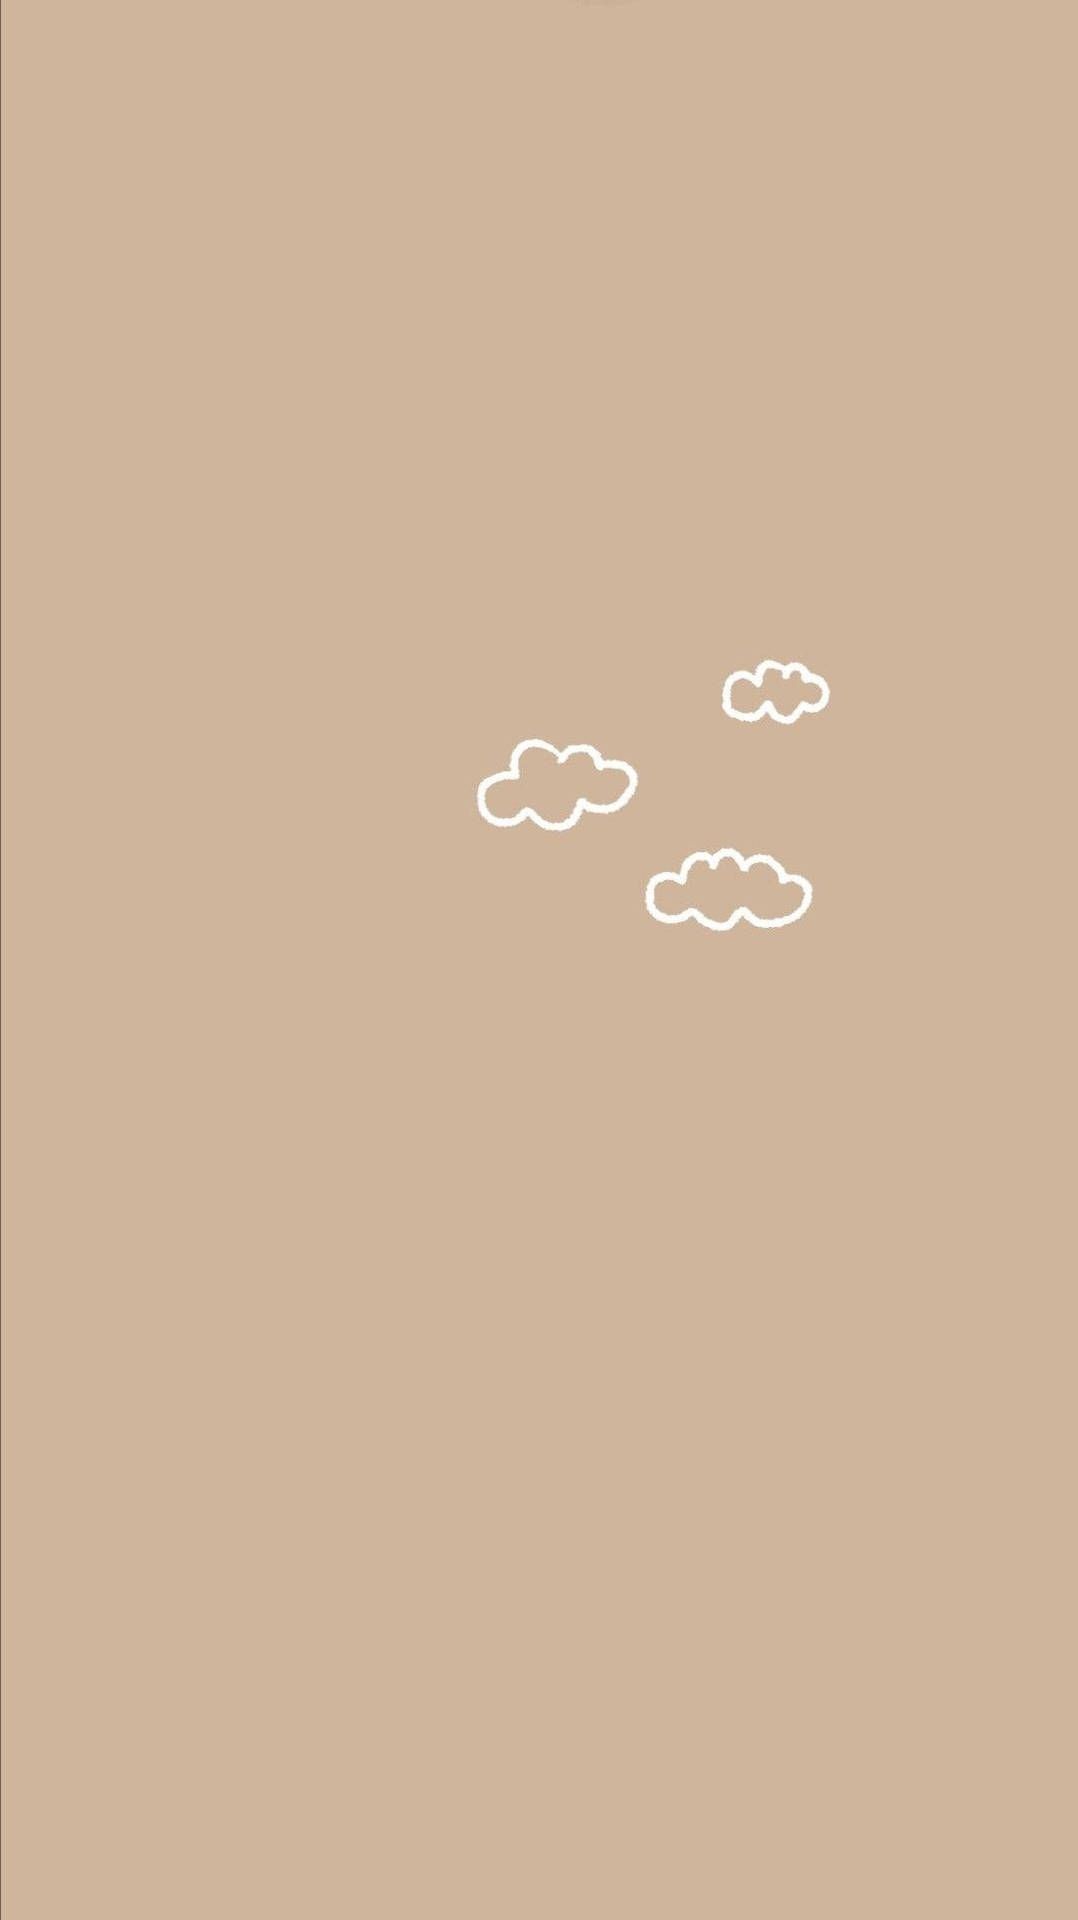 Beige background with white clouds - Minimalist